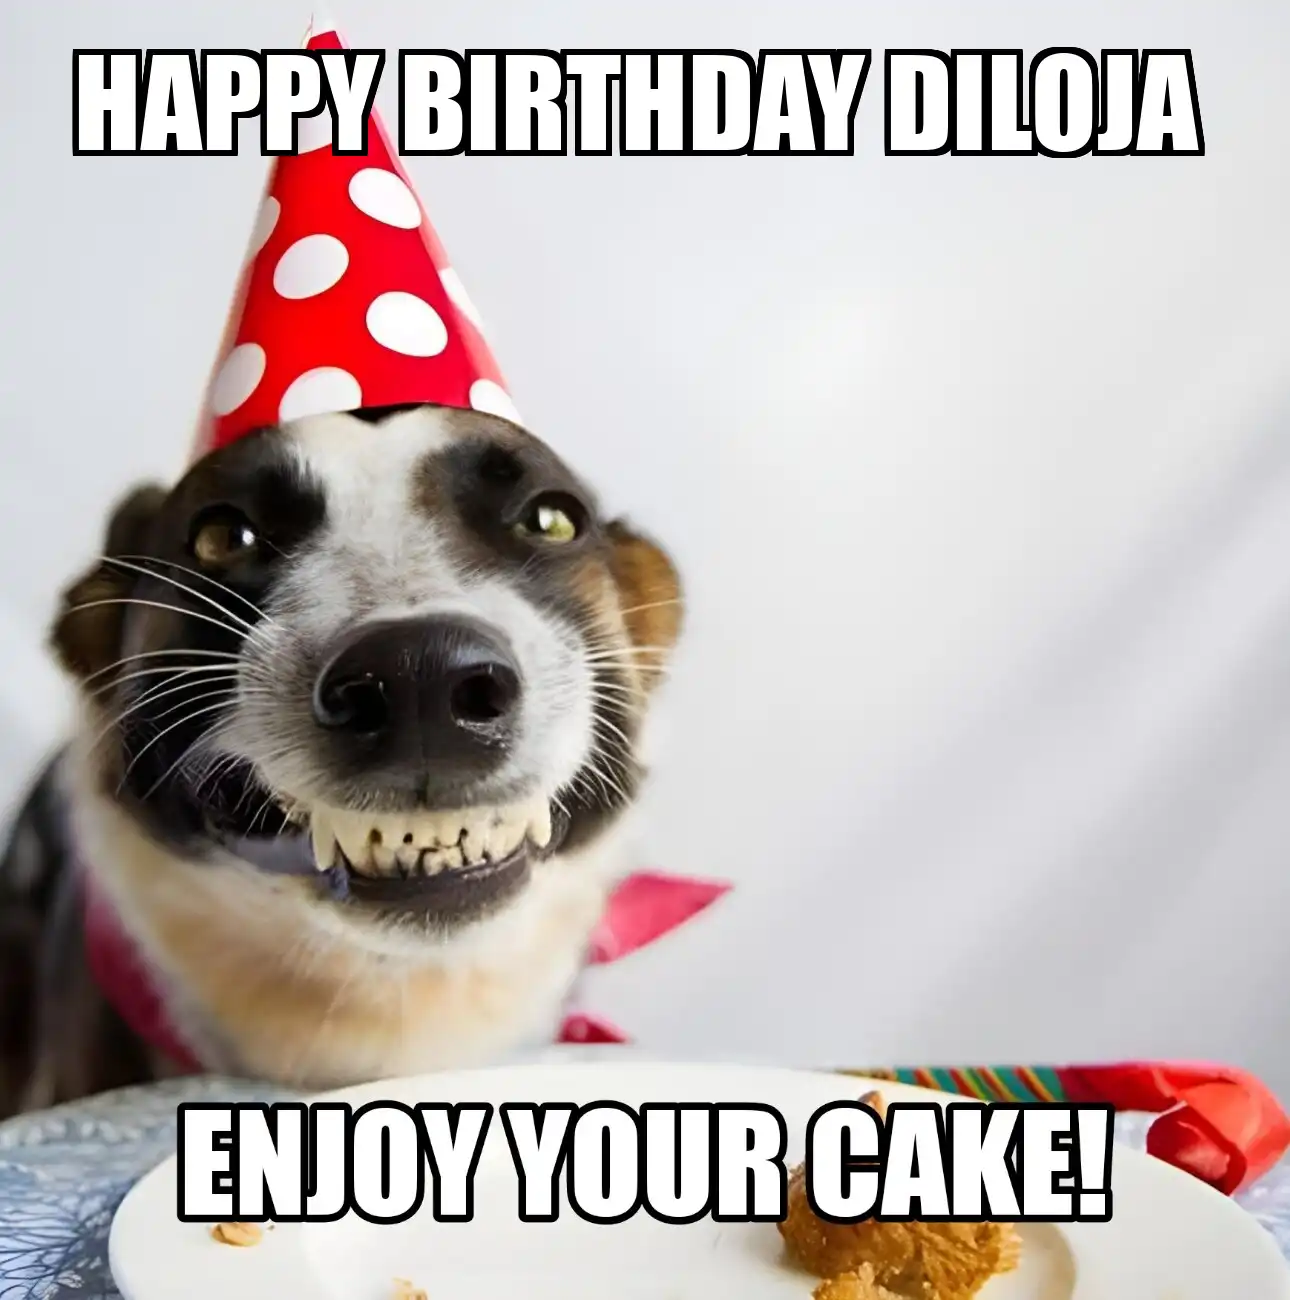 Happy Birthday Diloja Enjoy Your Cake Dog Meme